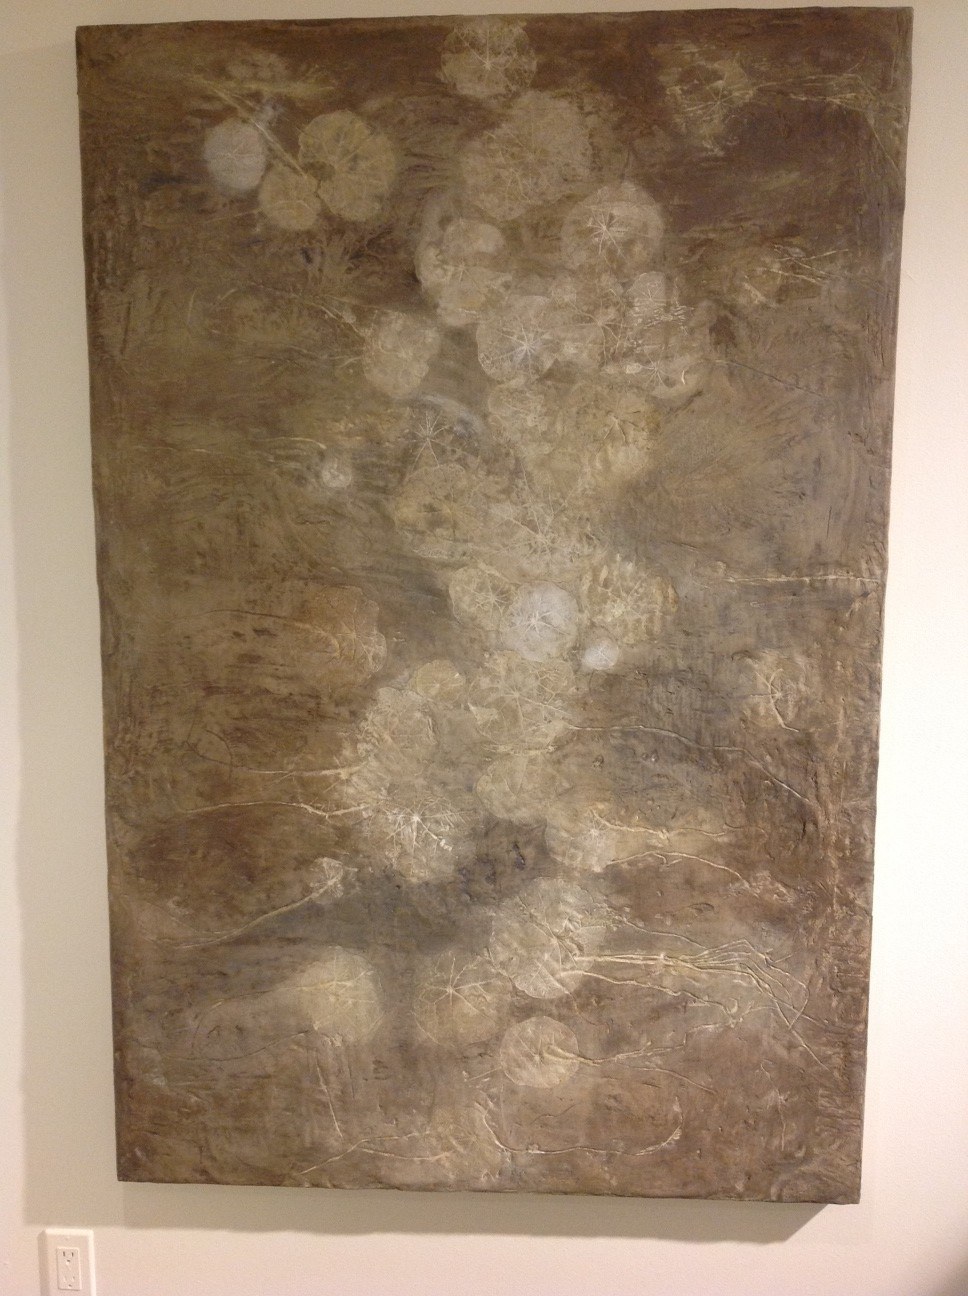 concrete wall panel with nasturtium leaf impressions